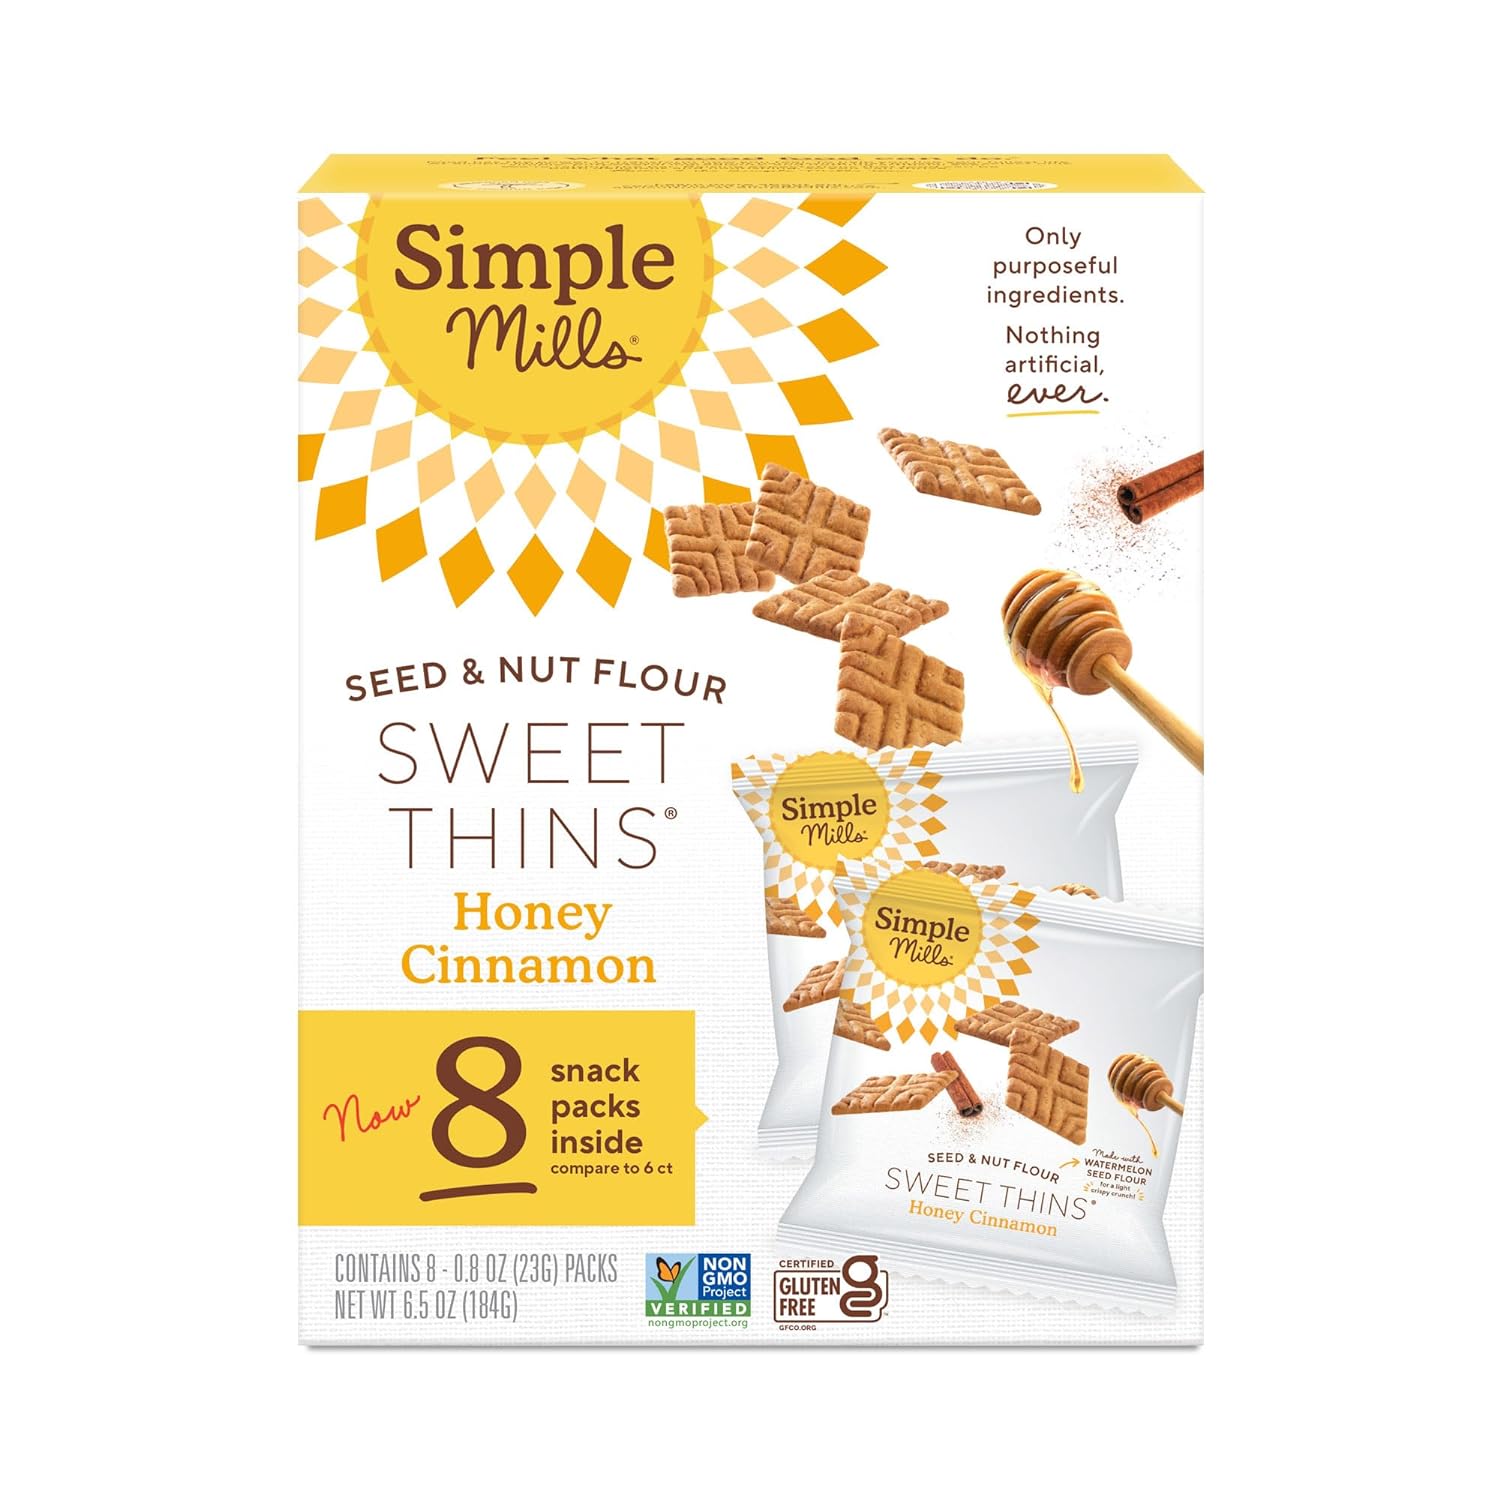 Simple Mills Snack Packs Honey Cinnamon Seed & Nut Flour Sweet Thins, Paleo Friendly & Delicious Sweet Thin Cookies, Good for Snacks, Nutrient Dense, 8 Pack (Pack of 1)